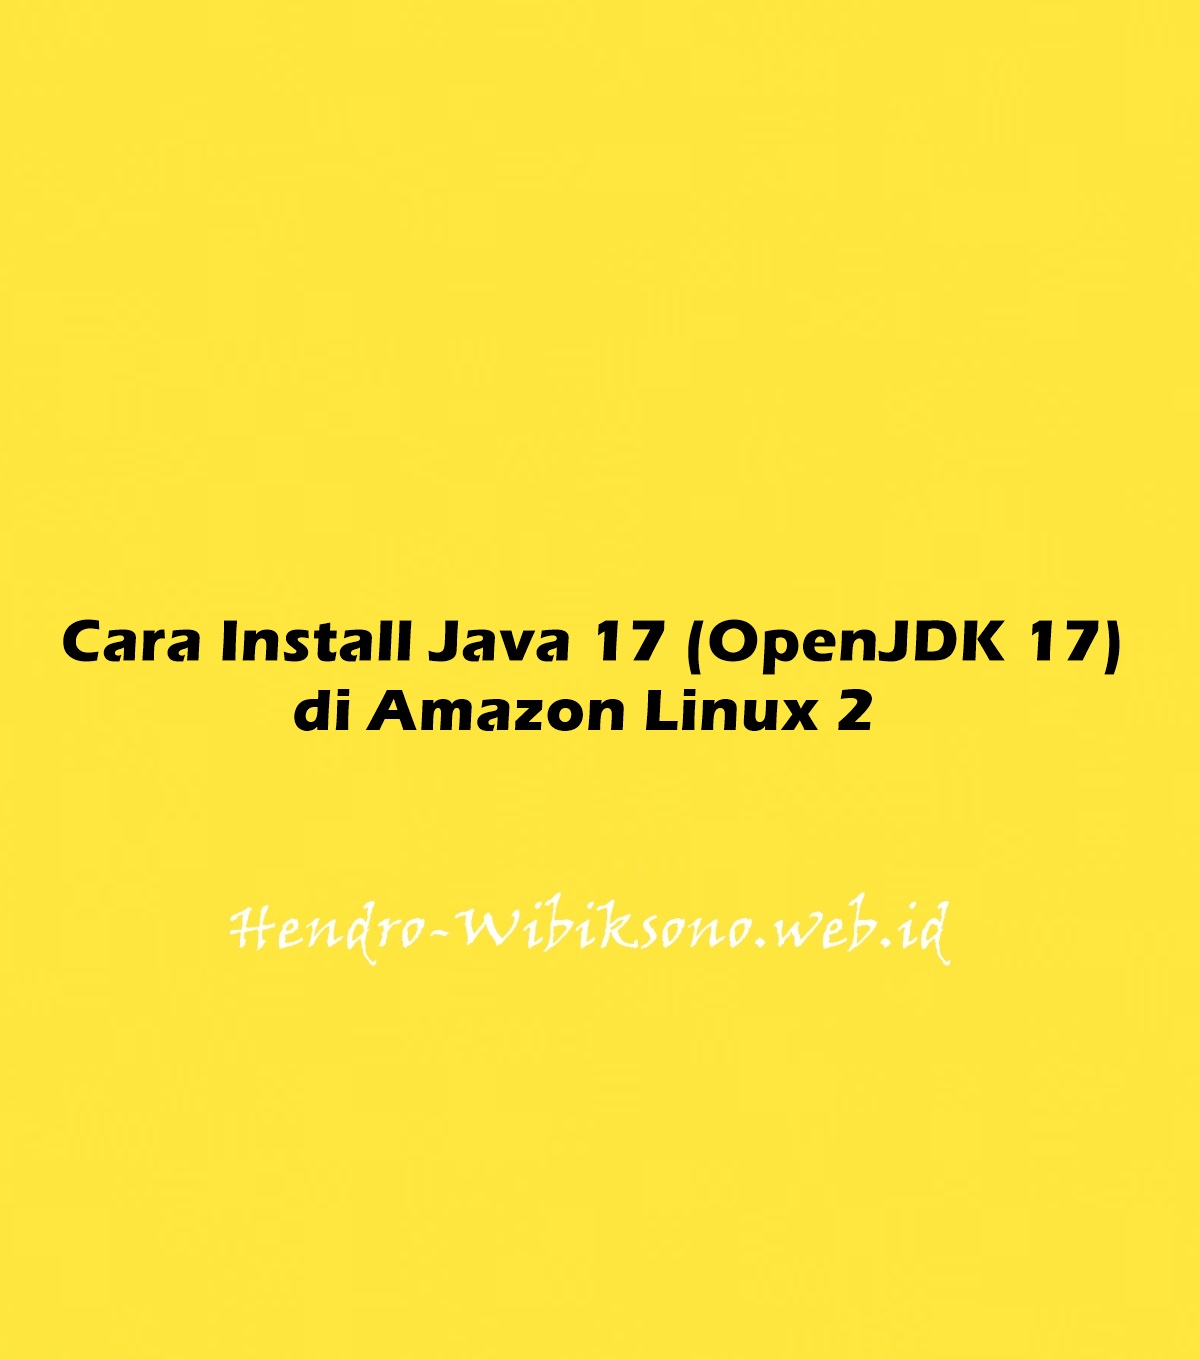 Cara Install Java 17 (OpenJDK 17) Di Amazon Linux 2